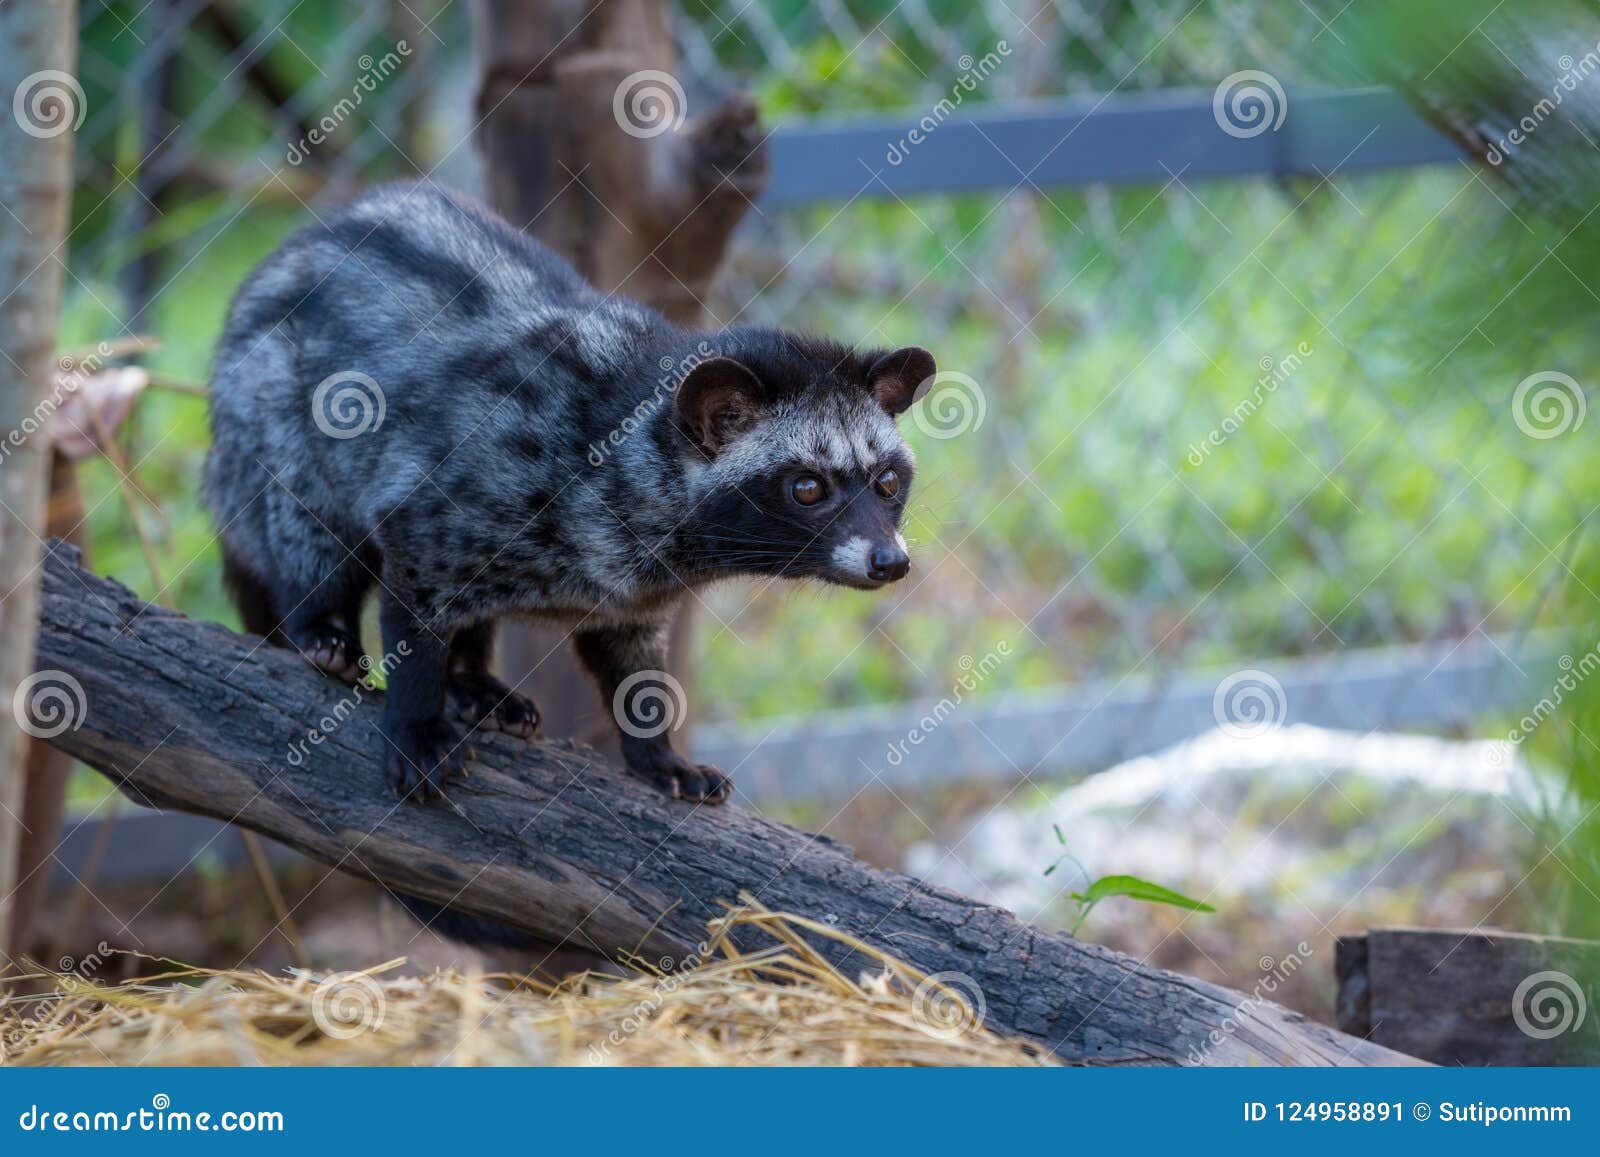 a civet cat in coffee garden